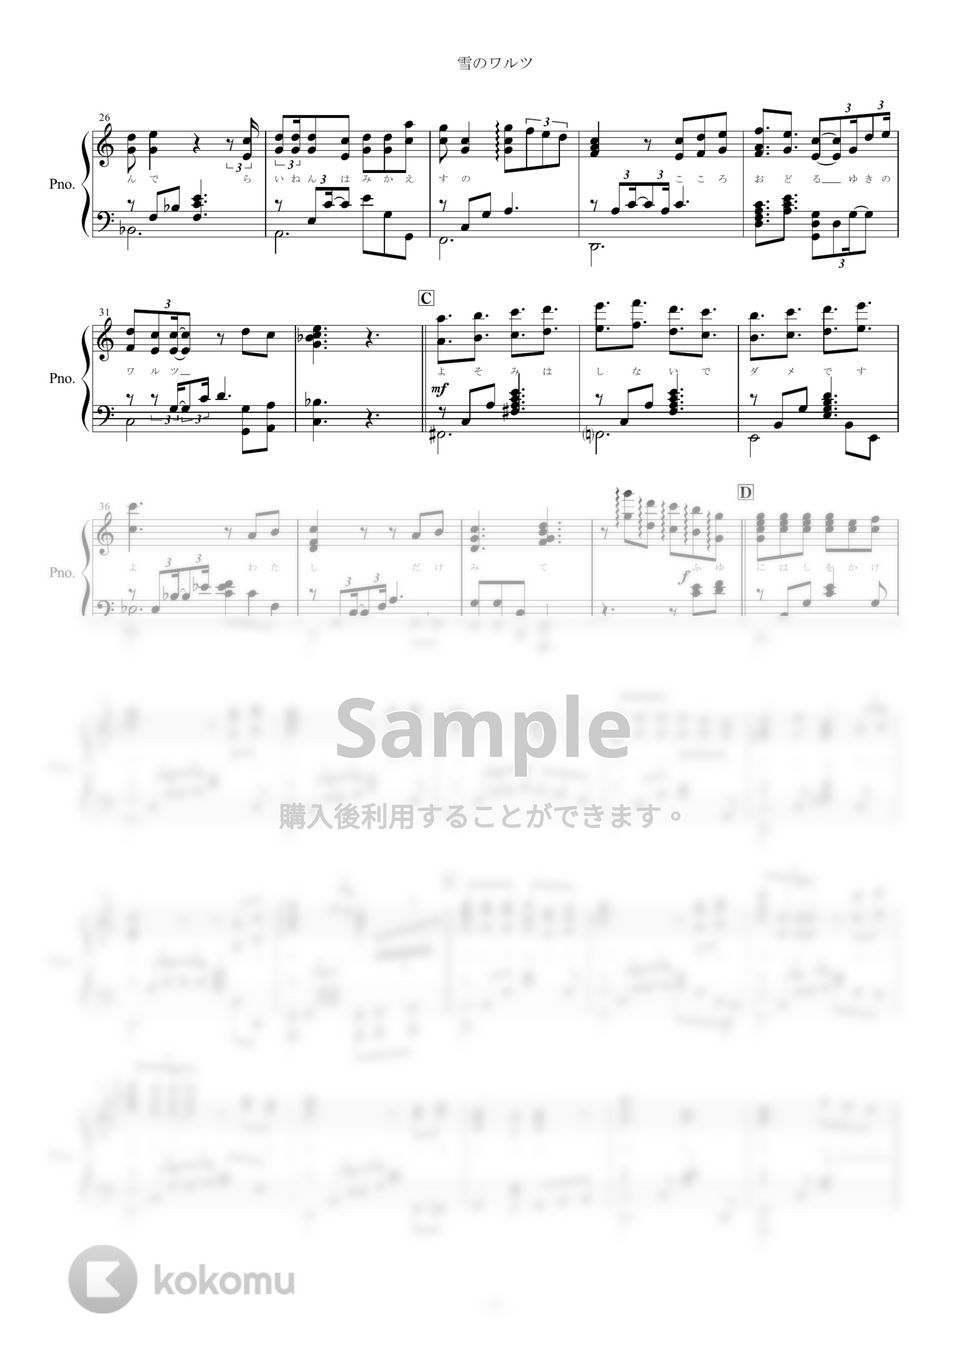 CHiCO with HoneyWorks - 雪のワルツ (ピアノ楽譜/全5ページ) by yoshi